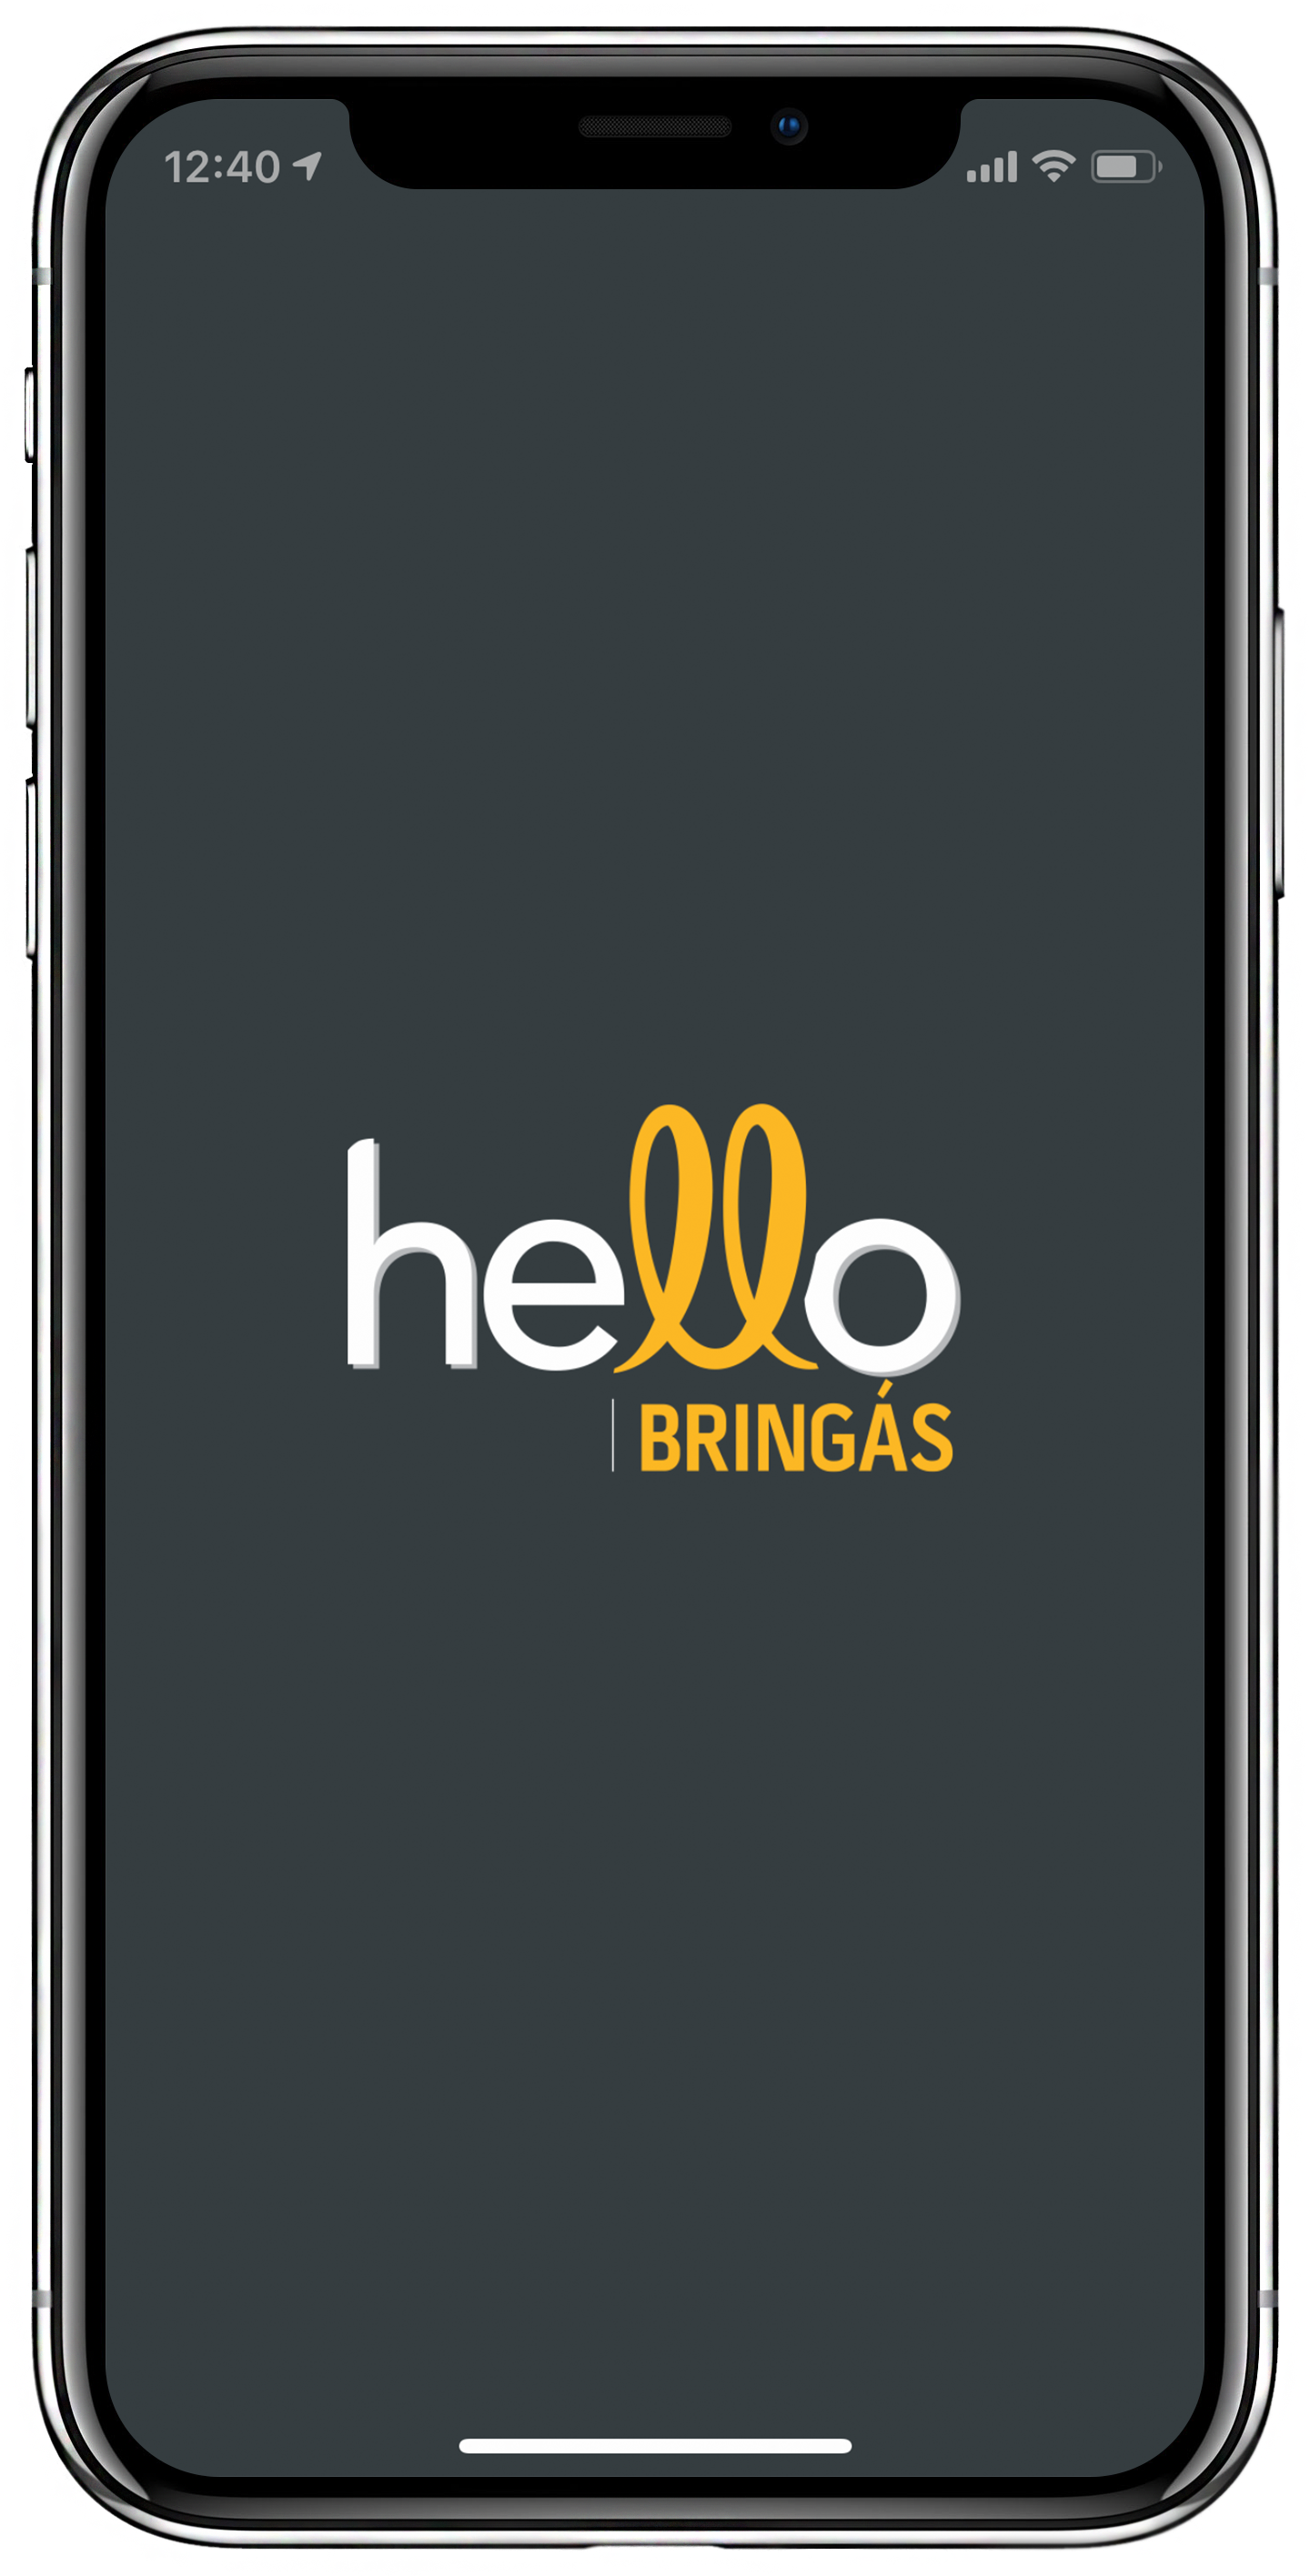 hello_bringas.png